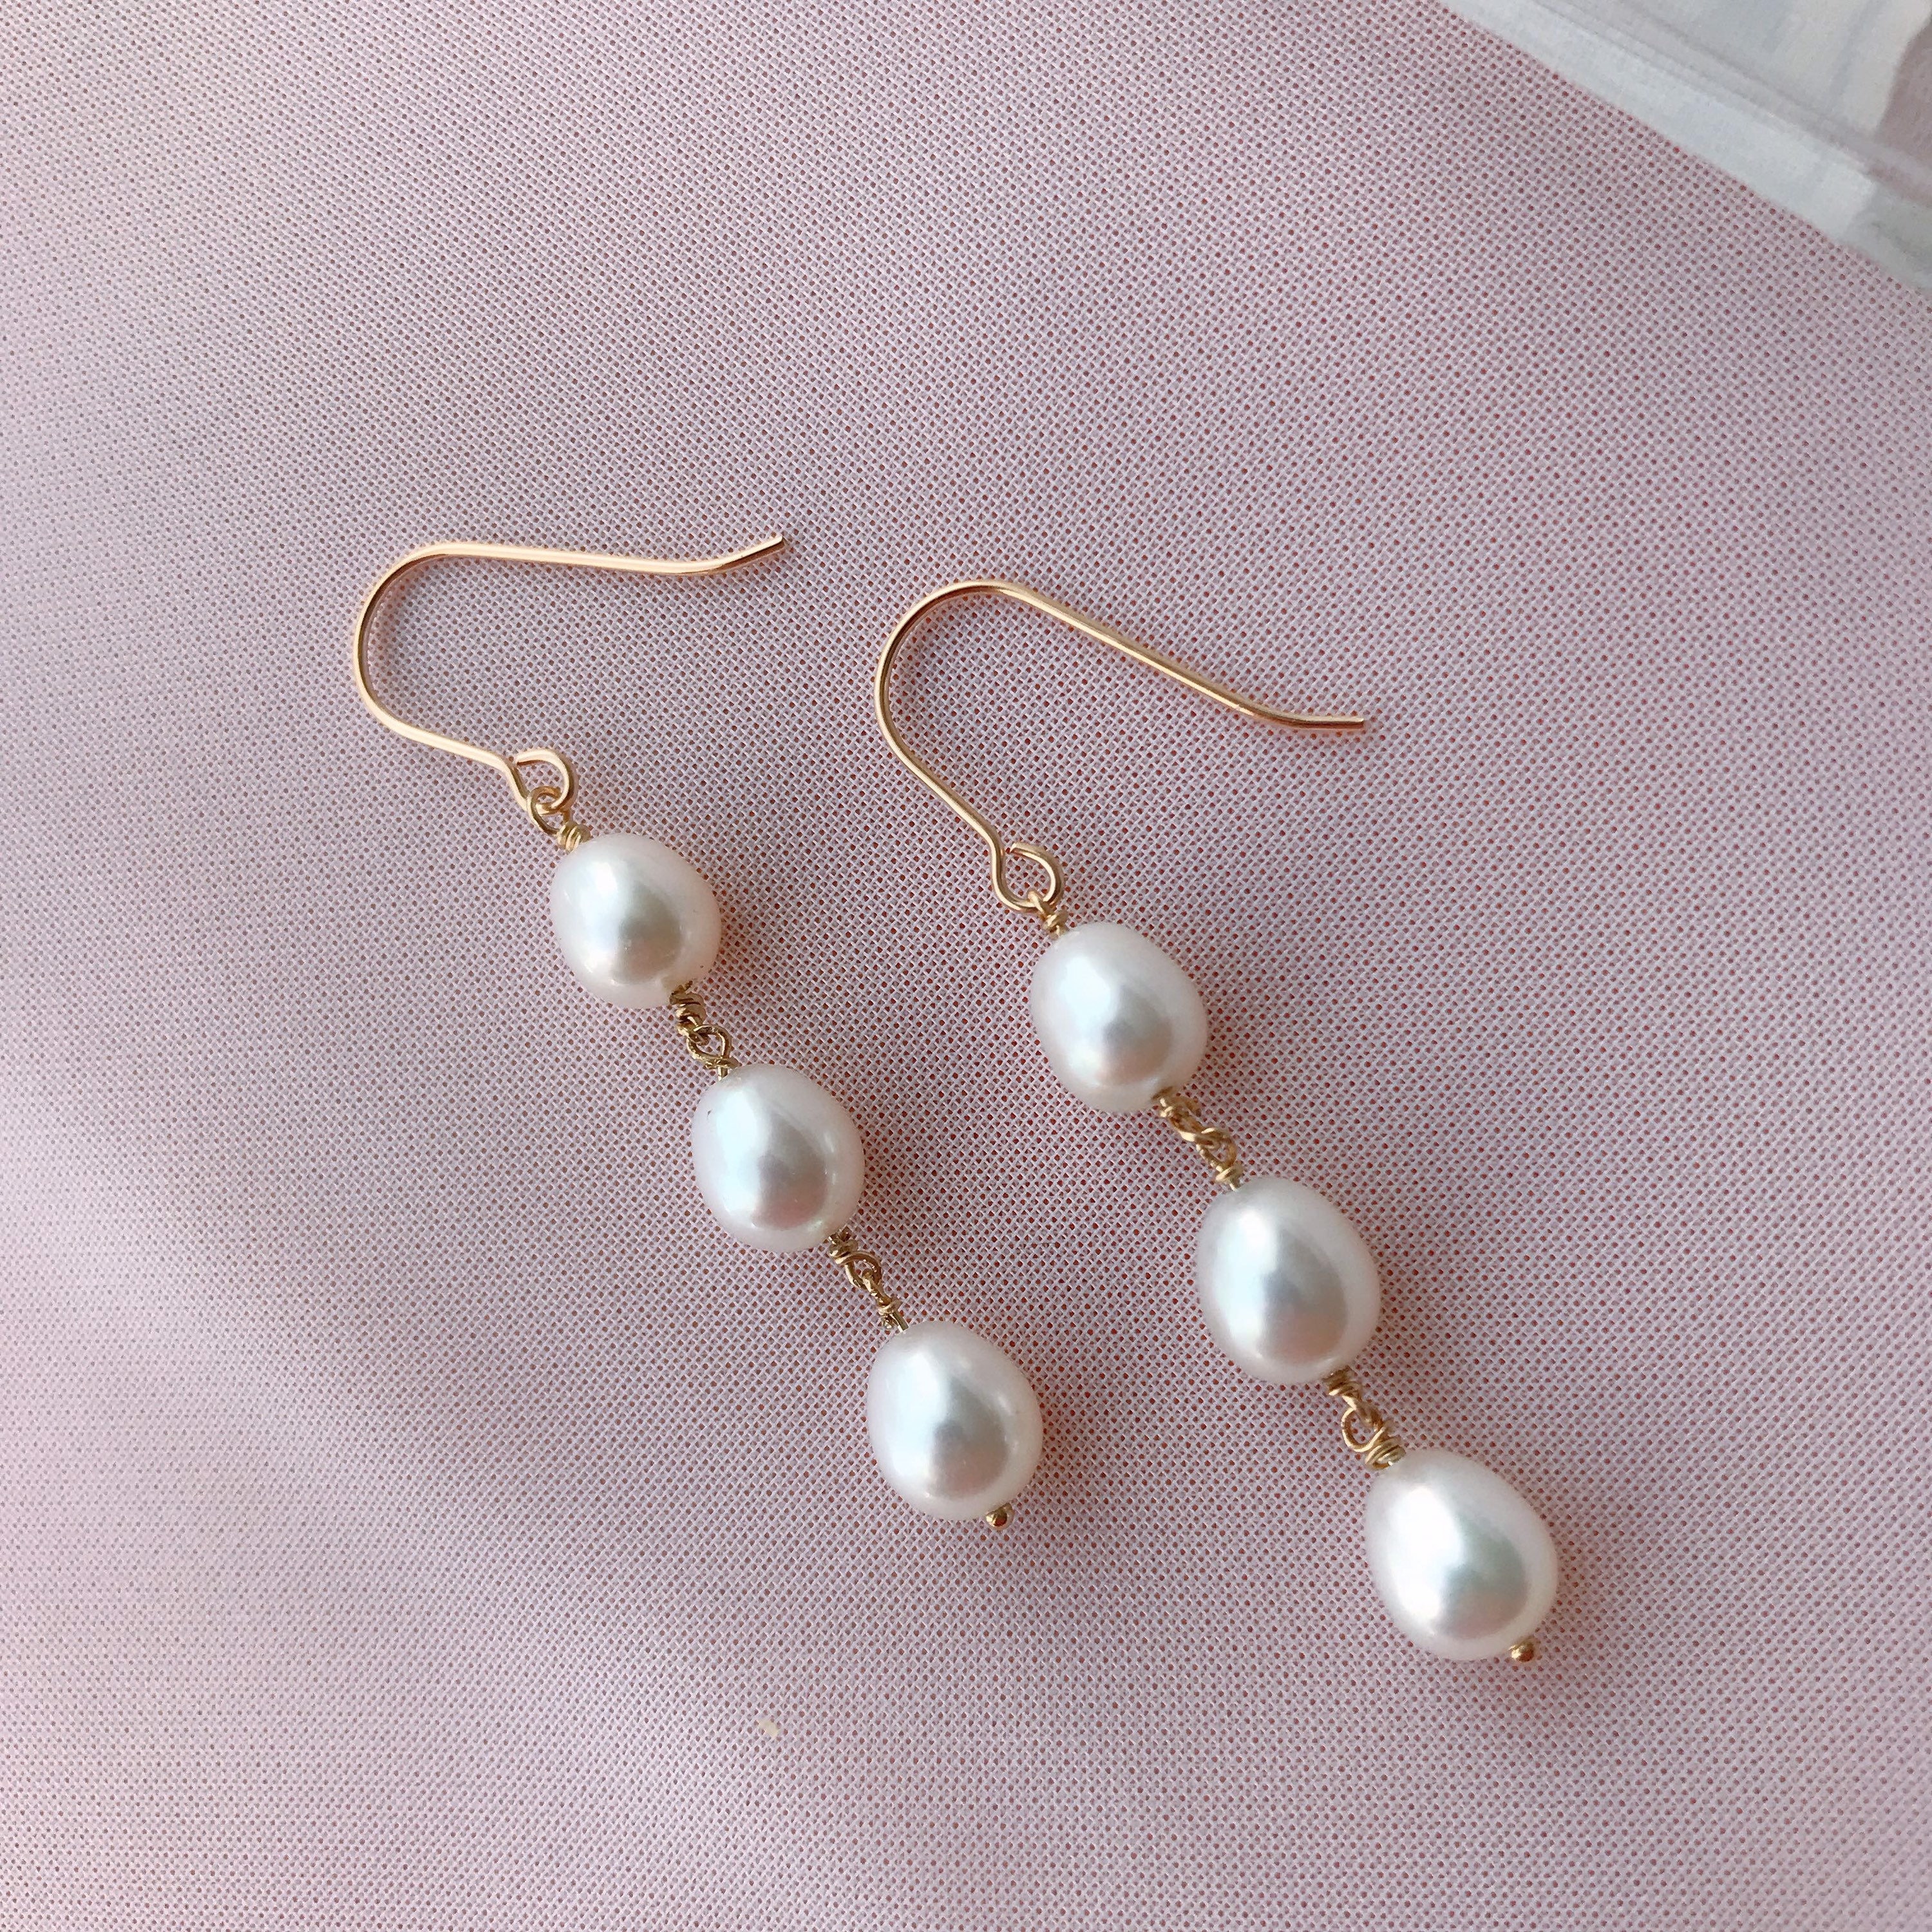 Pearl Drop Earrings, Freshwater Pearl Minimalist Earring, Tiny Earrings, 14K Gold Filled Gift For Her, Everyday Wear